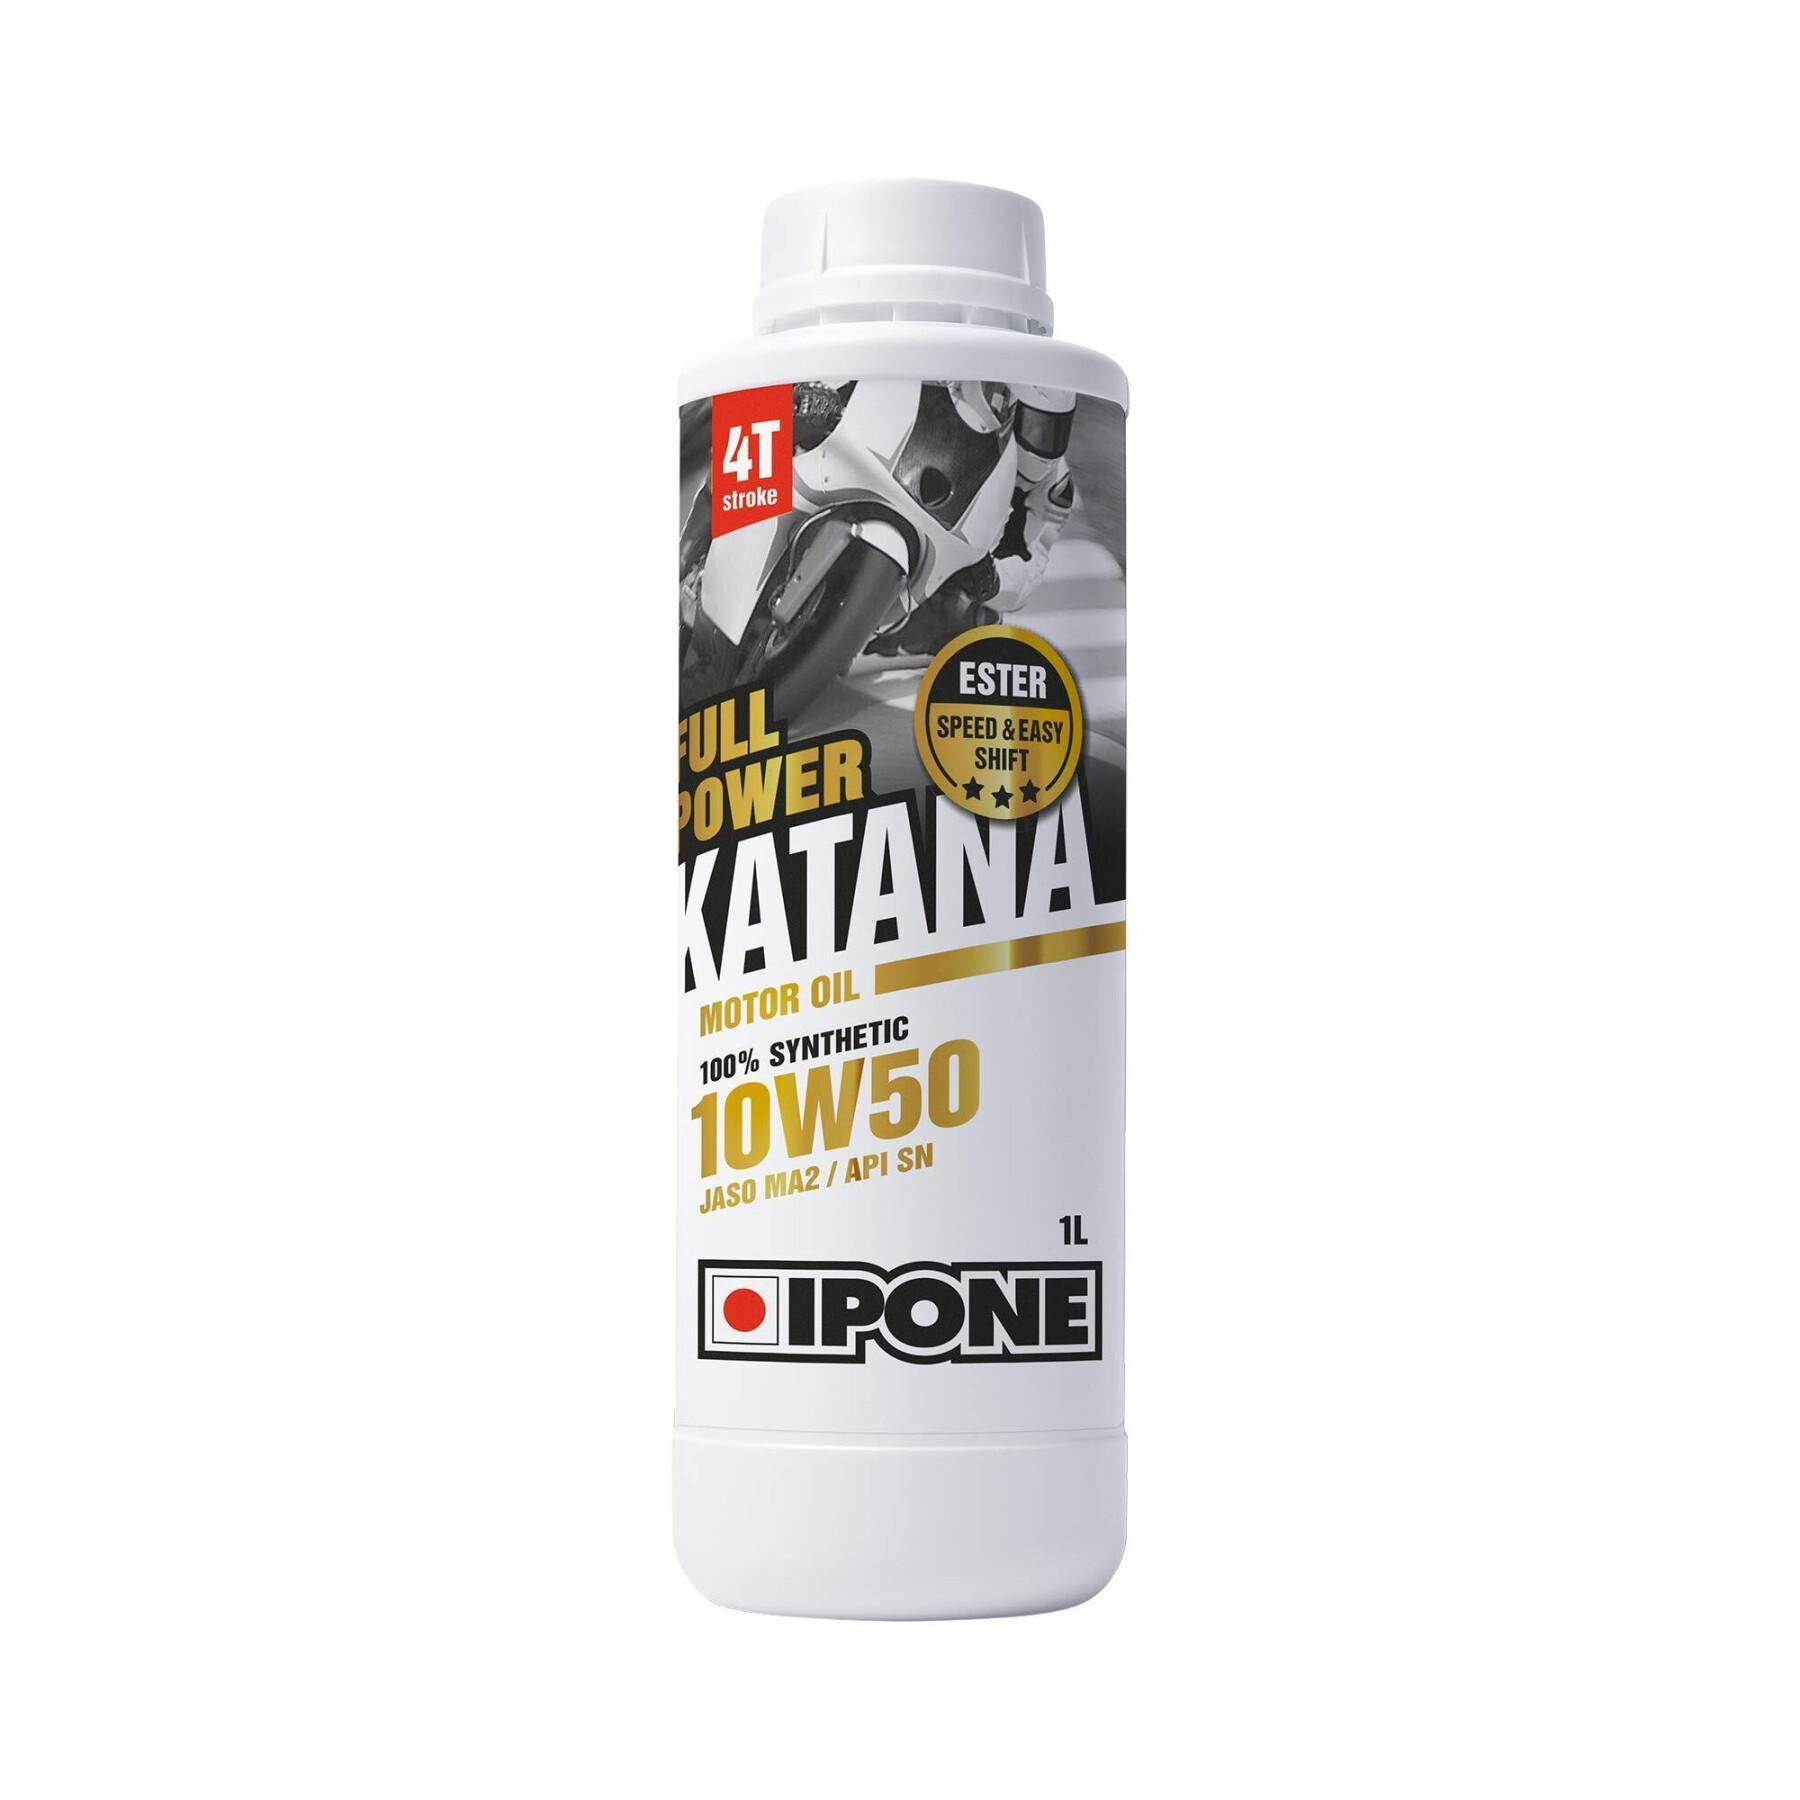 Motorcycle oil ipone full power katana 10w50